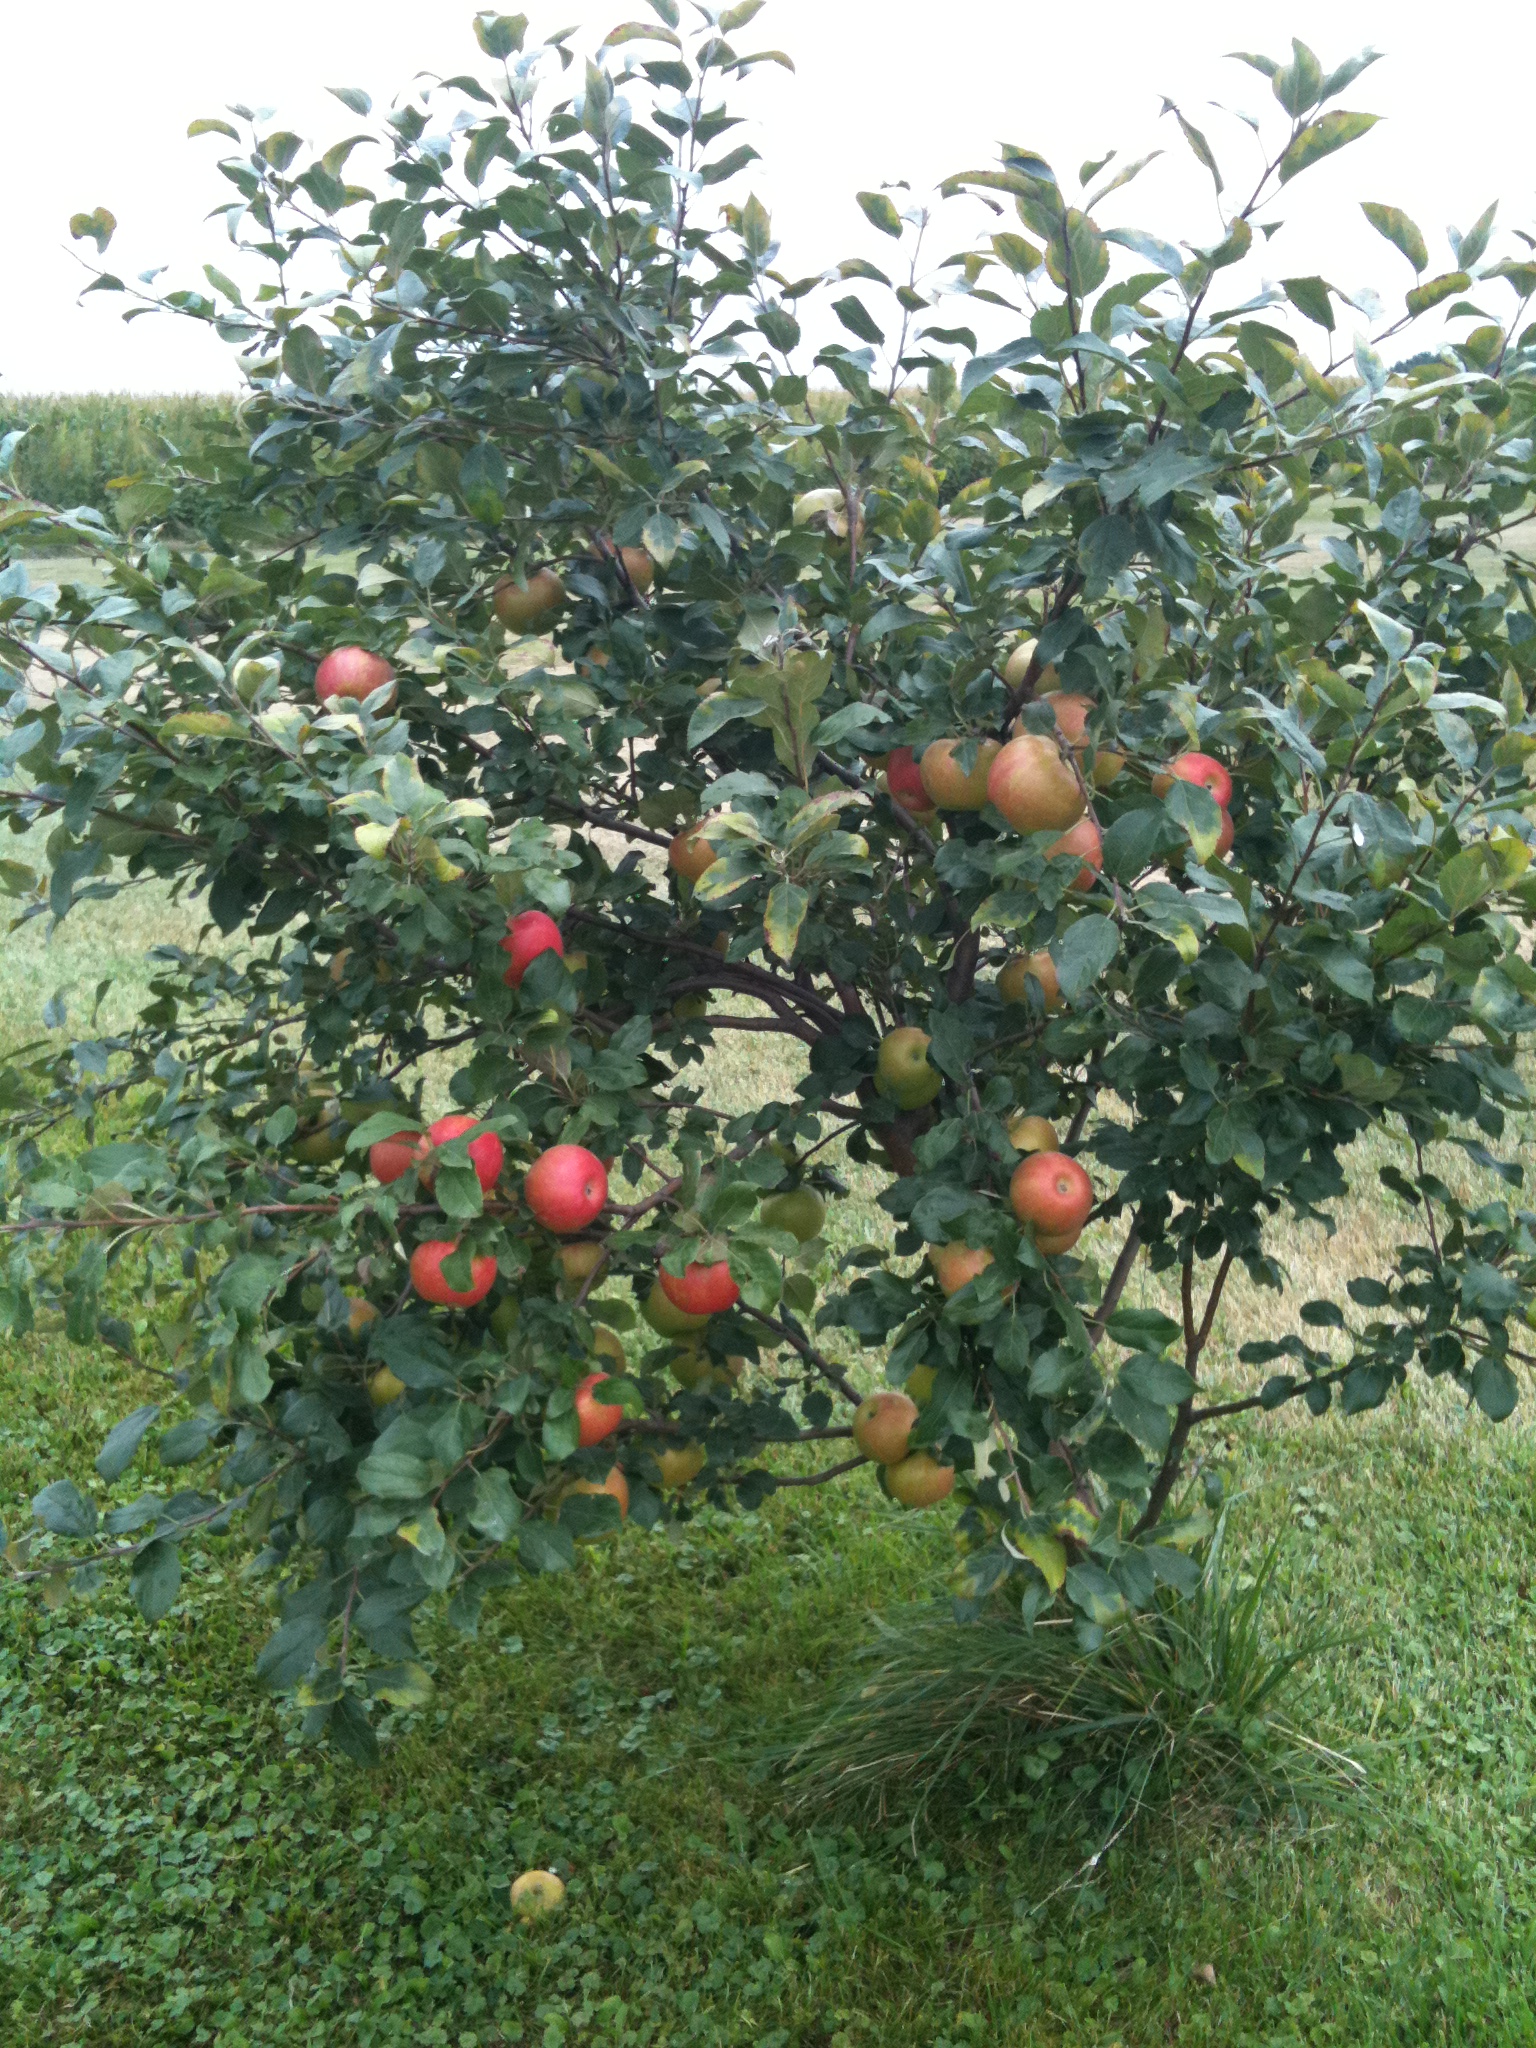 Minnesota's own Honeycrisp apples